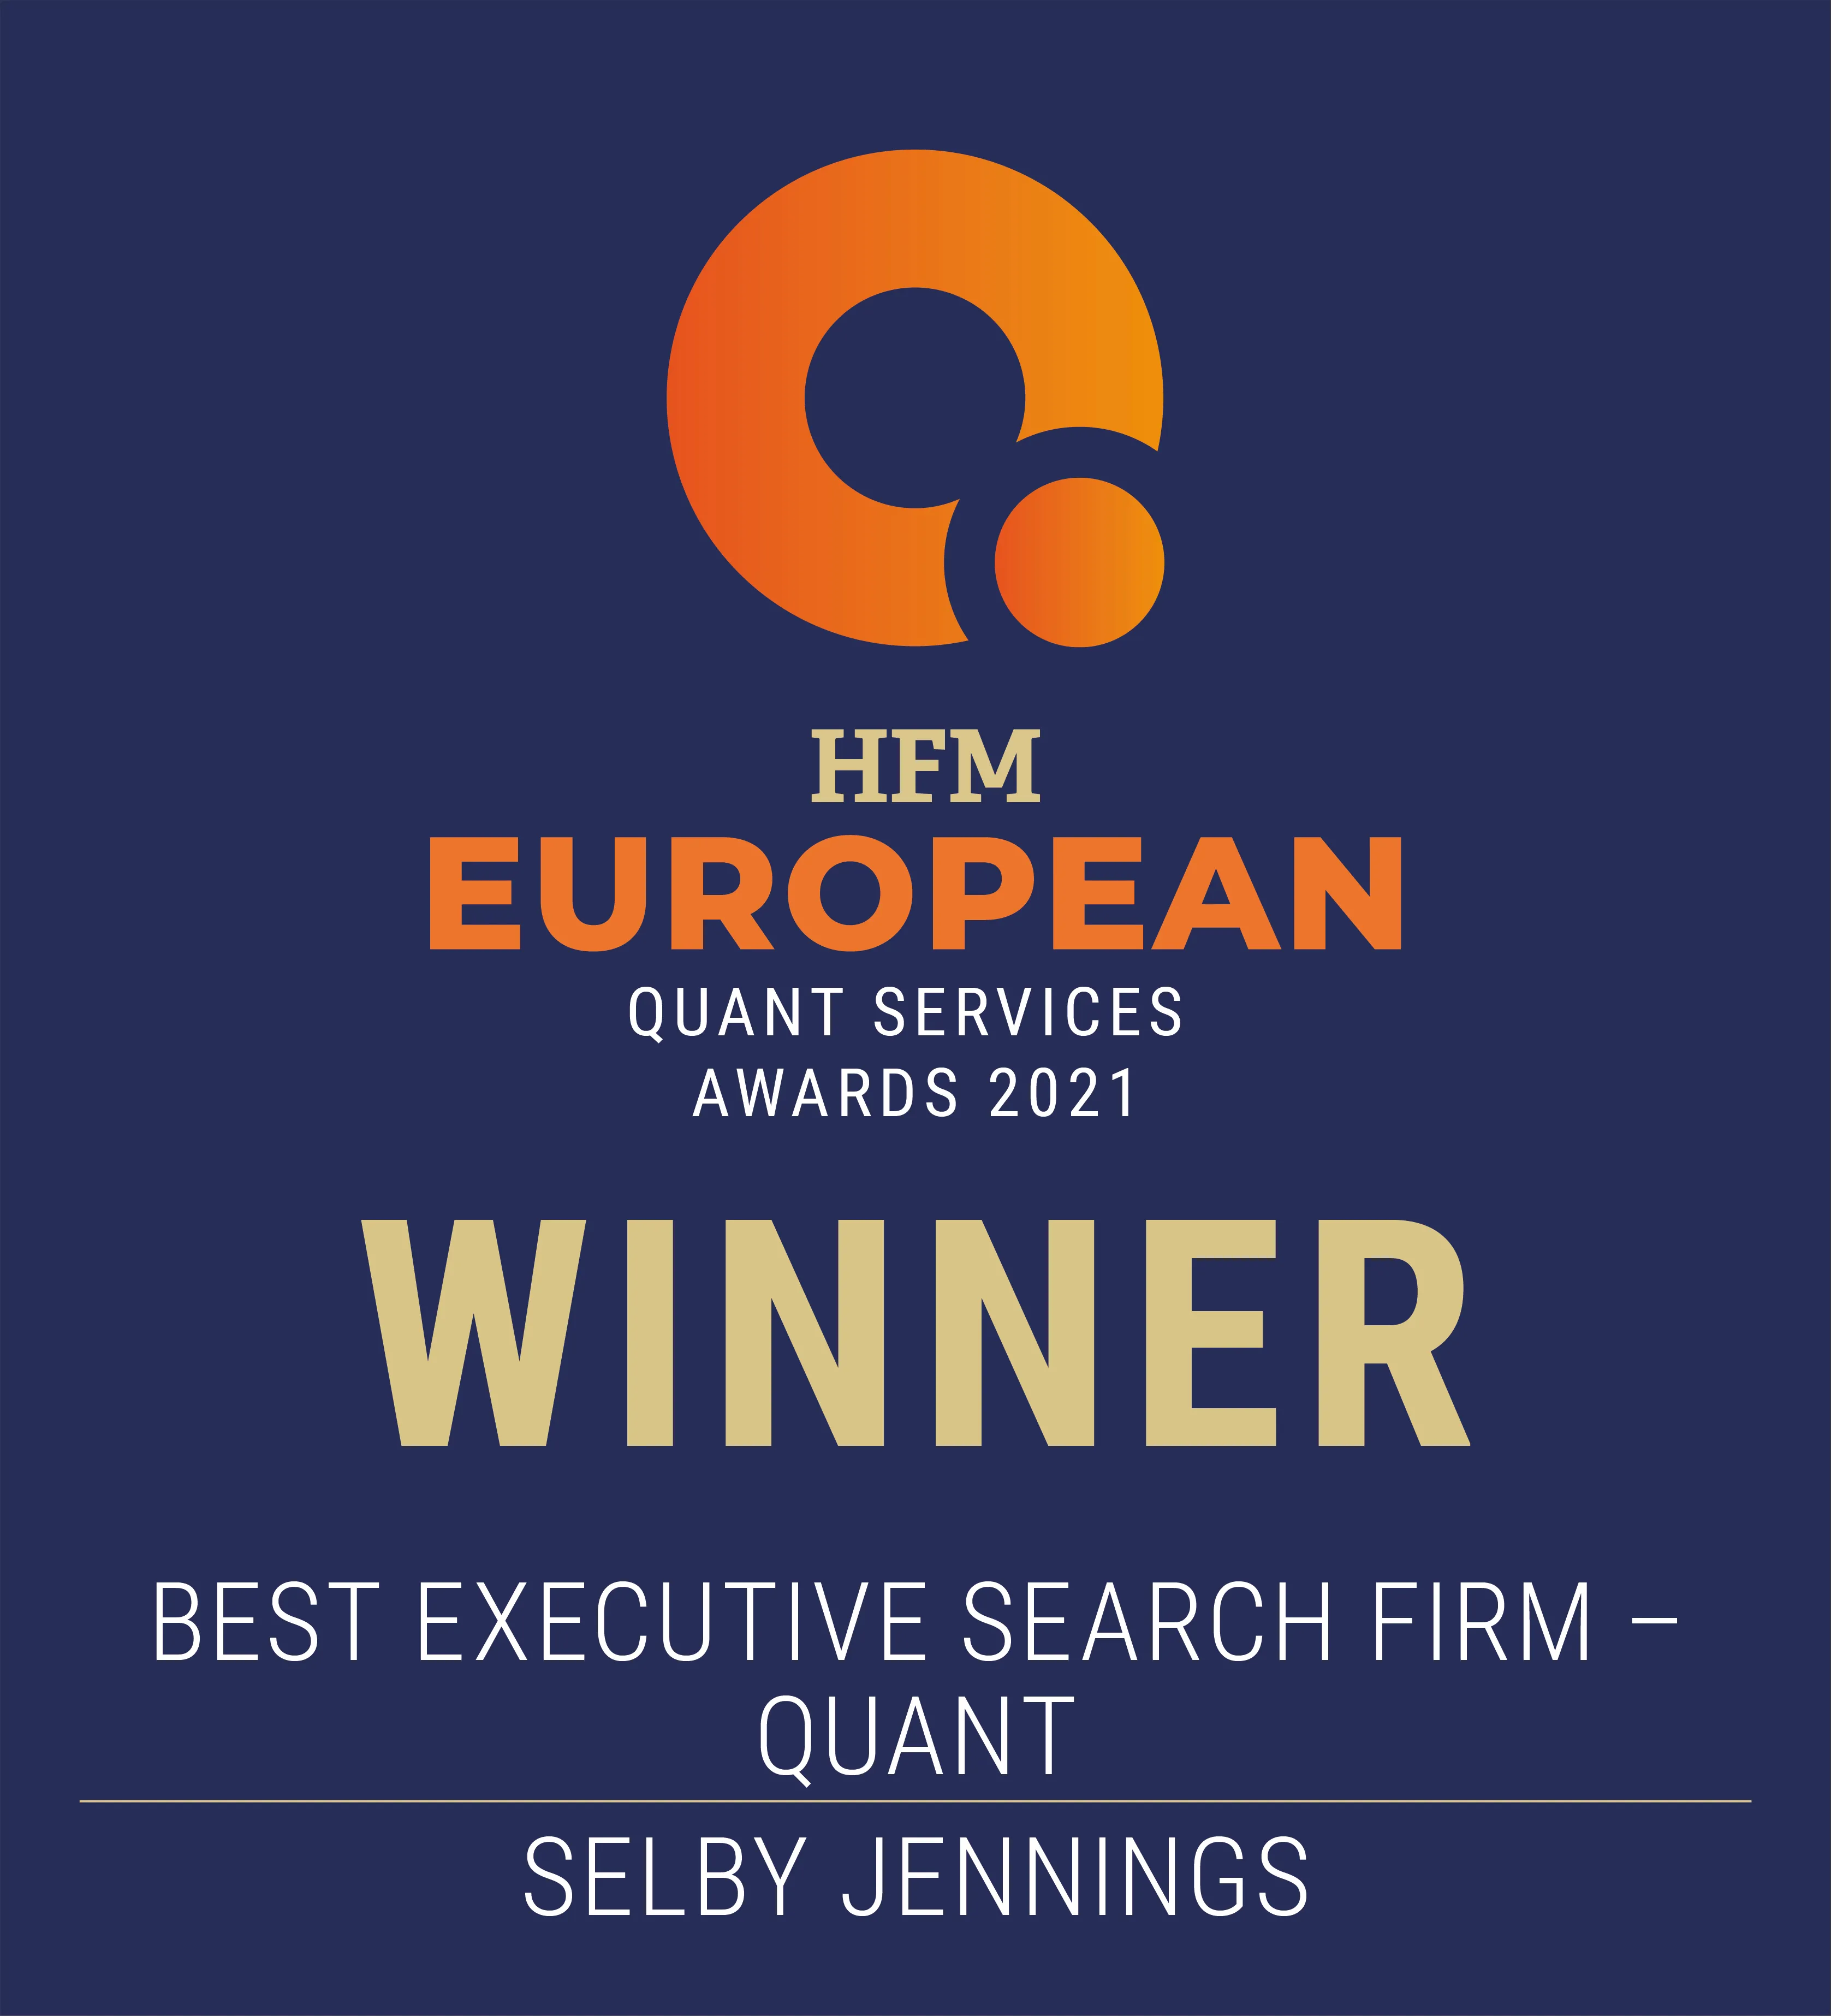 HFM European Quant Services Awards 2021